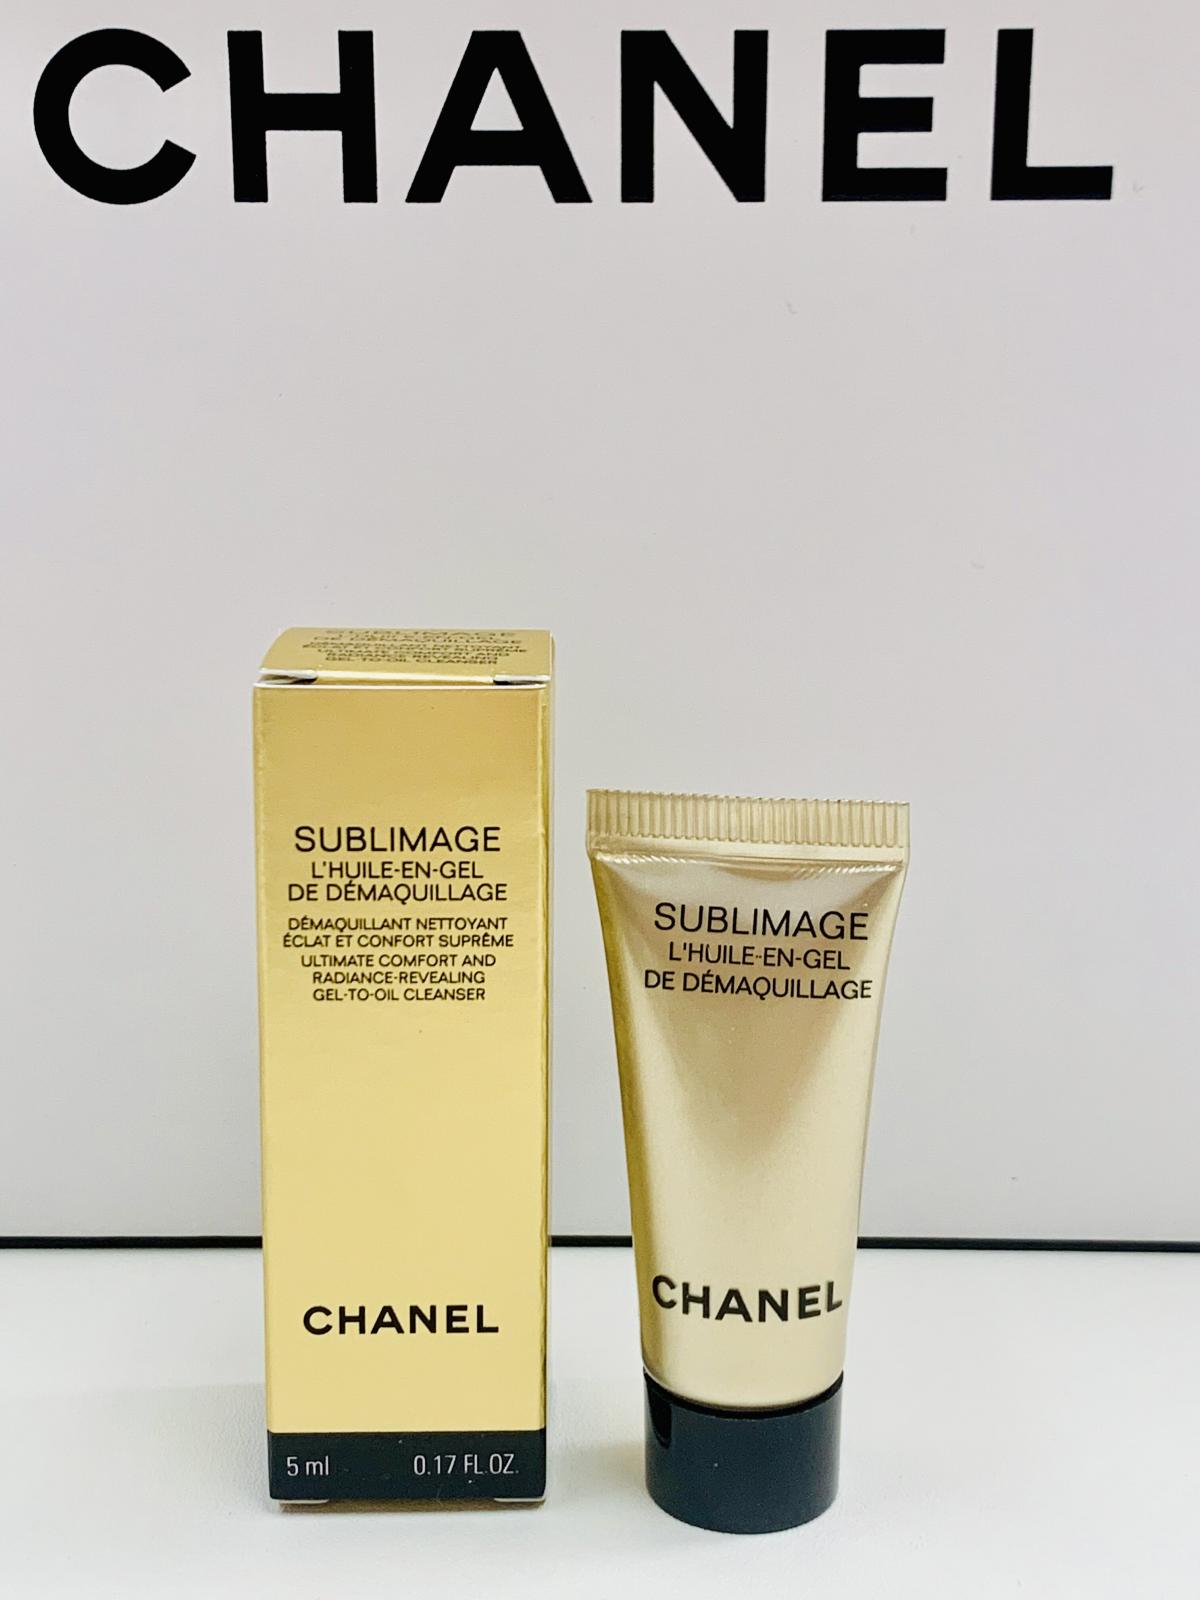 Chanel | CHAENL SUBLIMAGE CLEANSING GEL 5ML TRAVEL SIZE(PARALLEL IMPORT) |  HKTVmall The Largest HK Shopping Platform